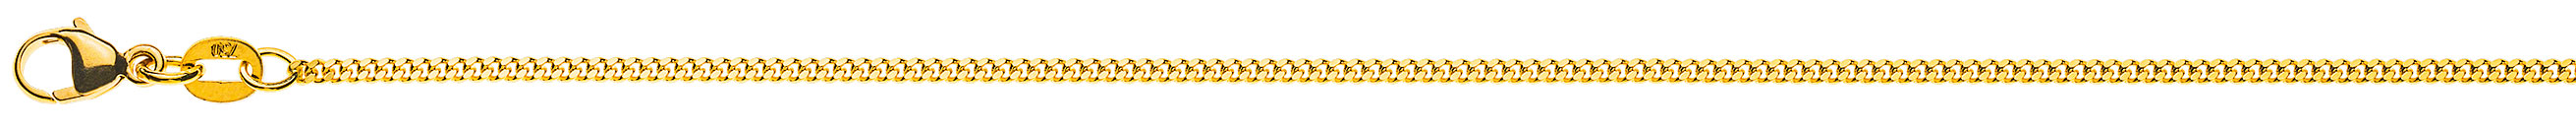 AURONOS Prestige Necklace yellow gold 18K curb chain polished 42cm 1.6mm